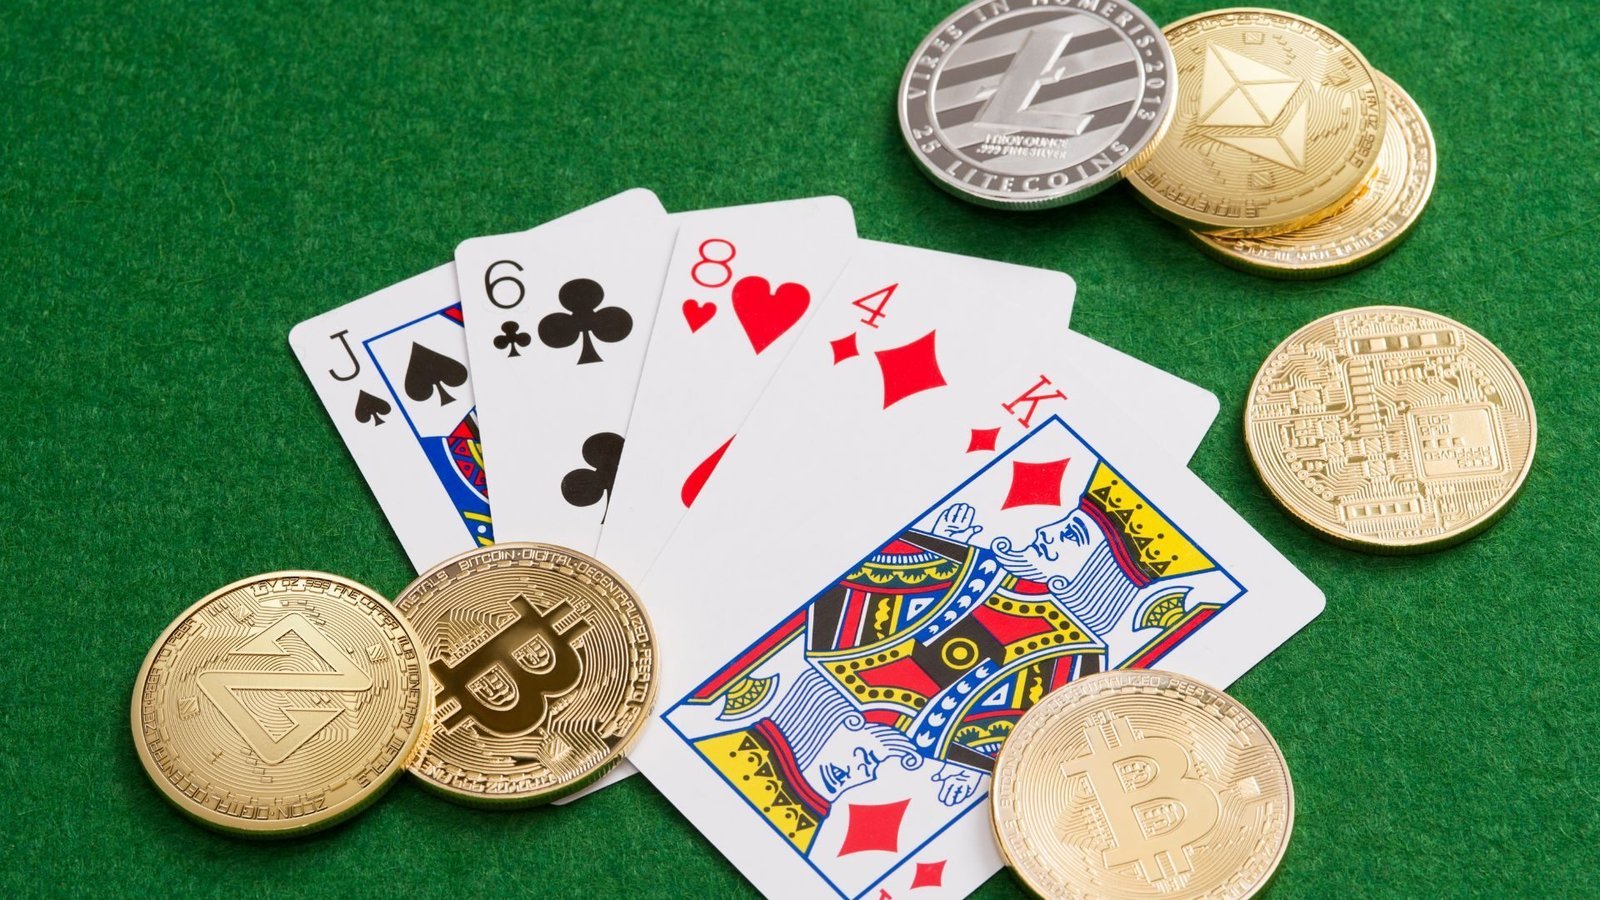 legal-gambling-global-online-gambling-market-sports-betting-casino-games-mobile-gambling-online-gaming-gambling-laws